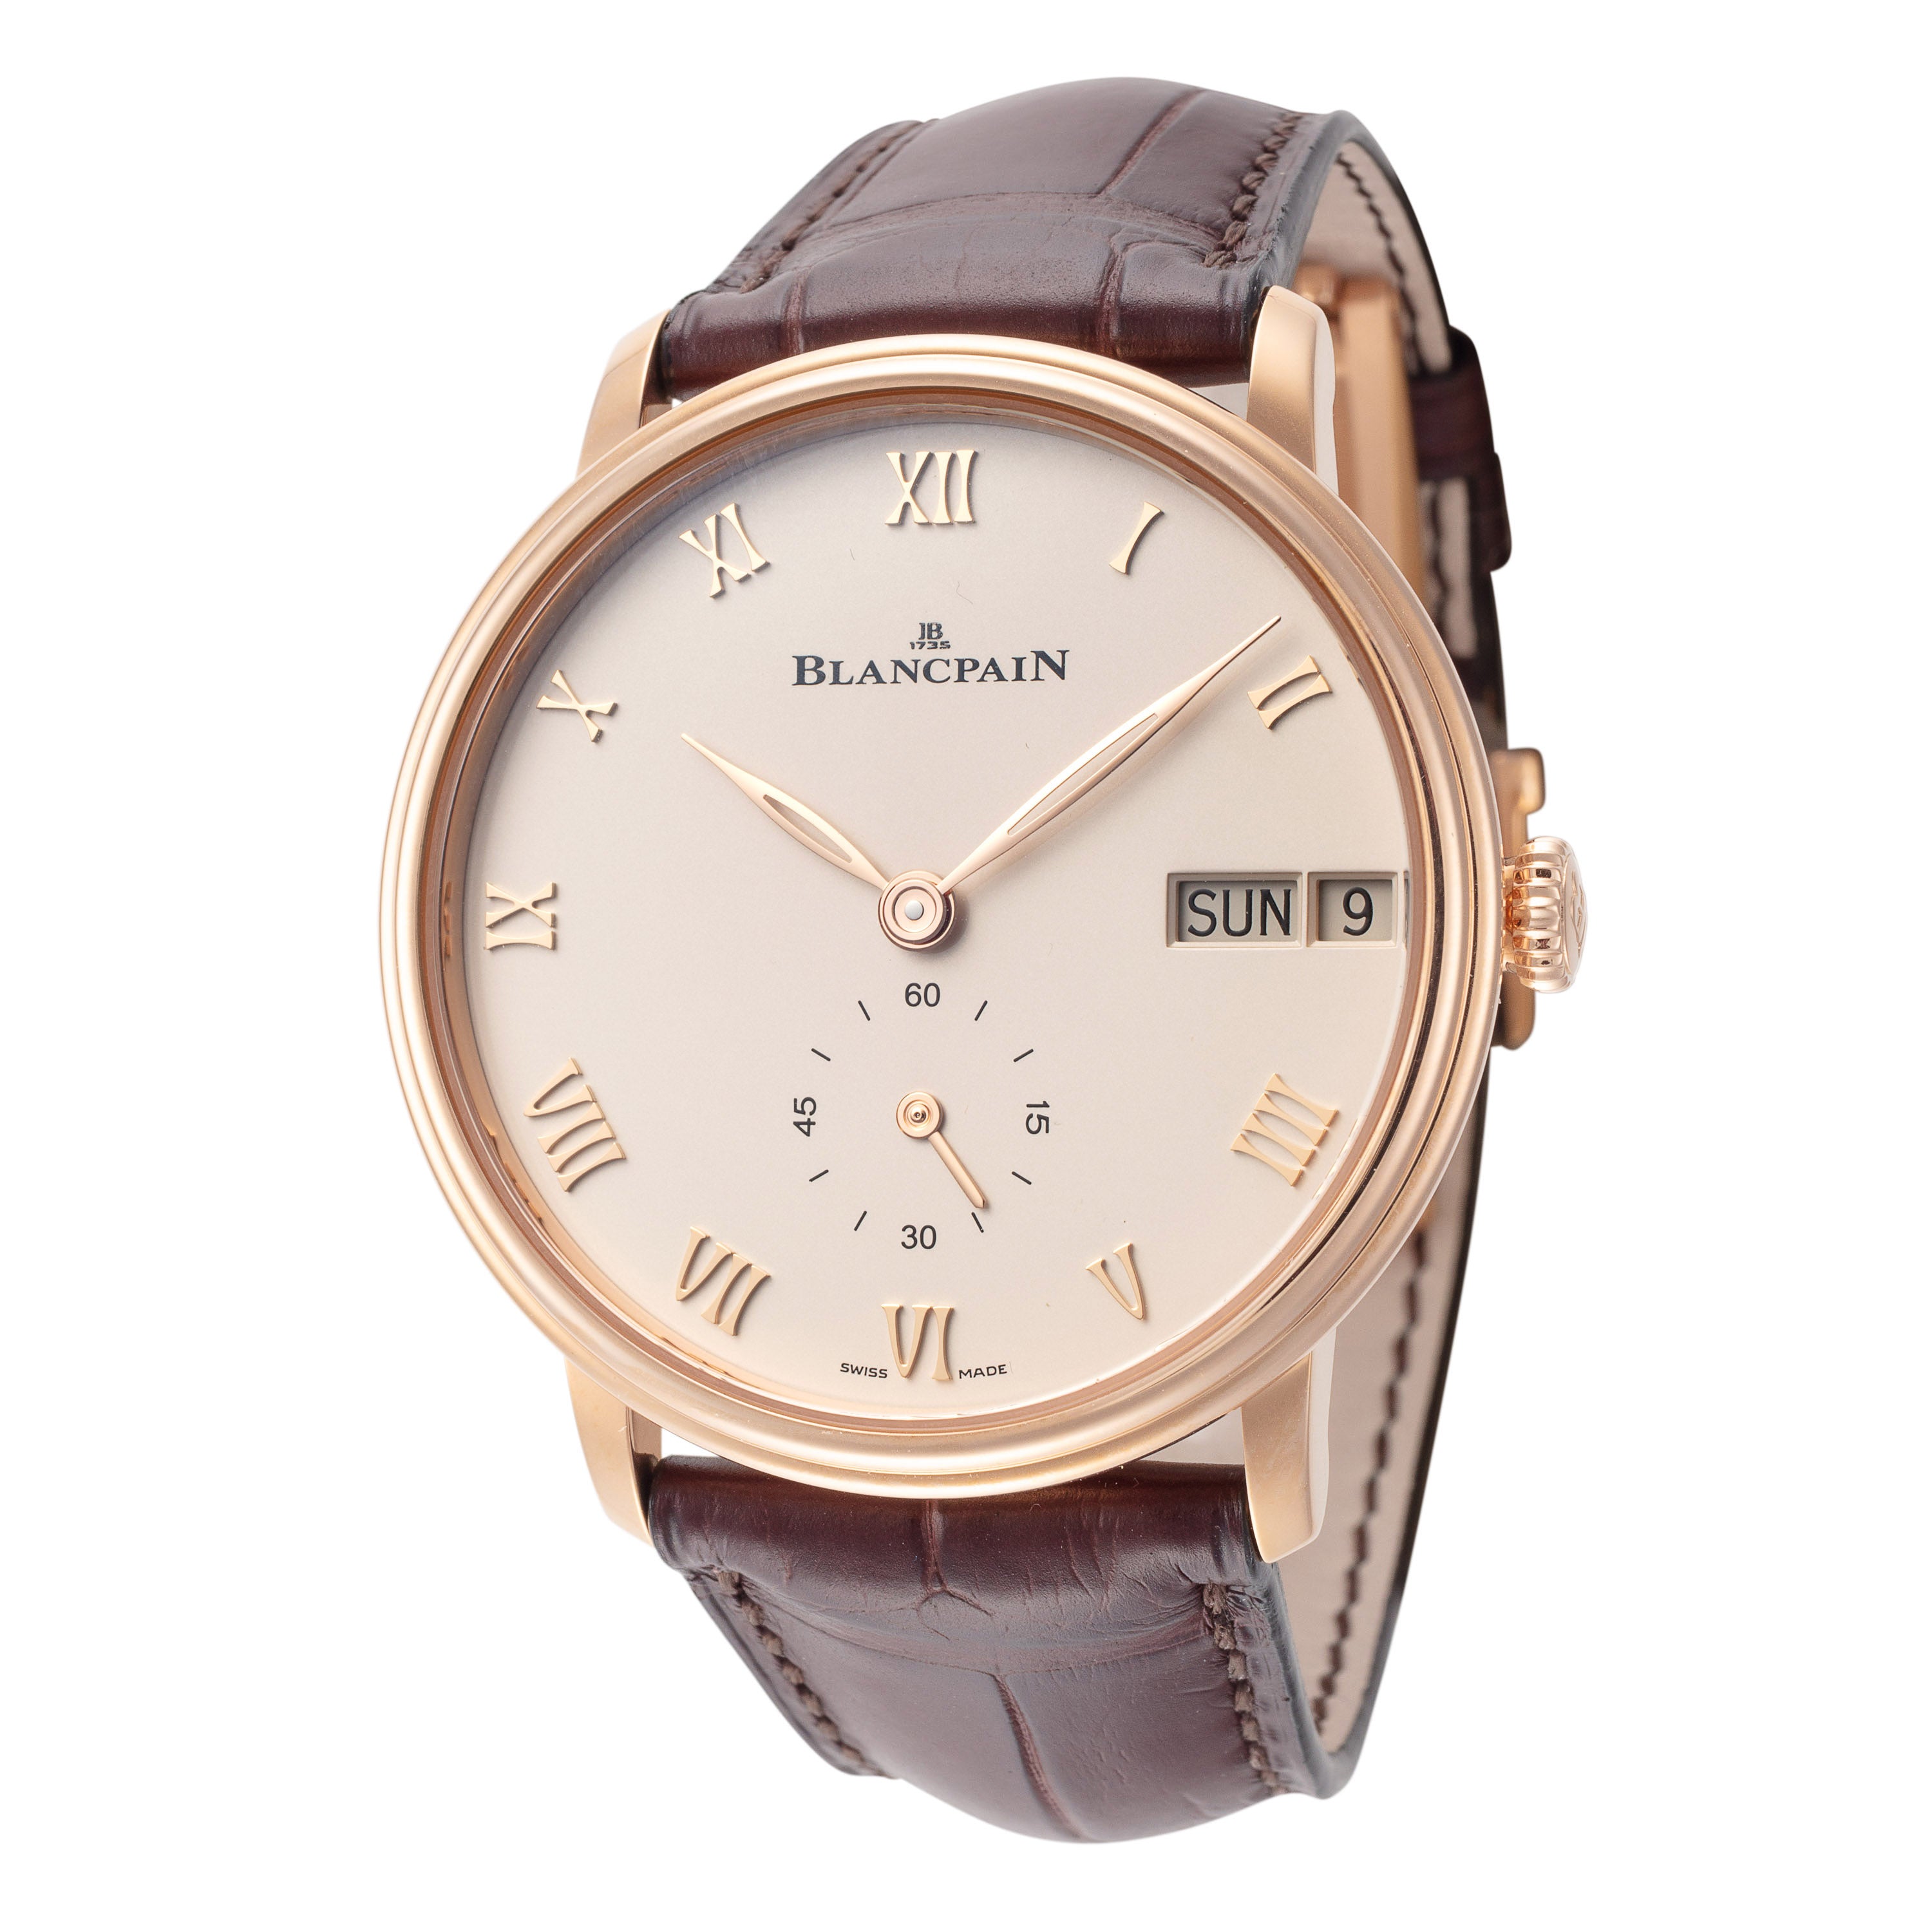 Blancpain Men's 40mm Automatic Watch In Burgundy